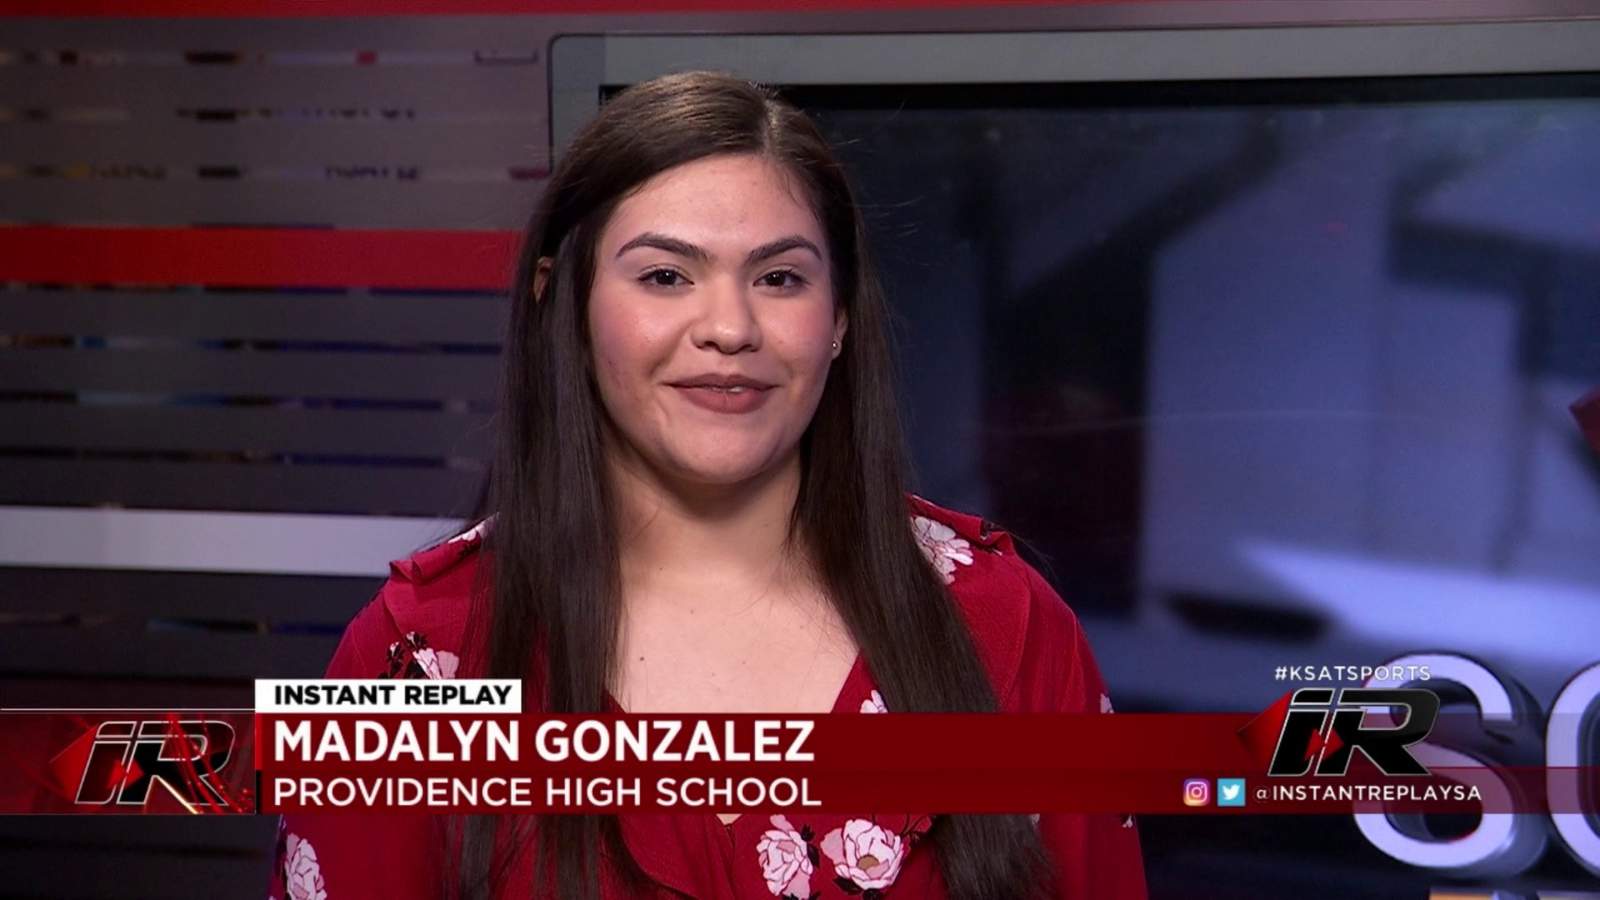 Scholar Athlete: Madalyn Gonzalez, Providence High School